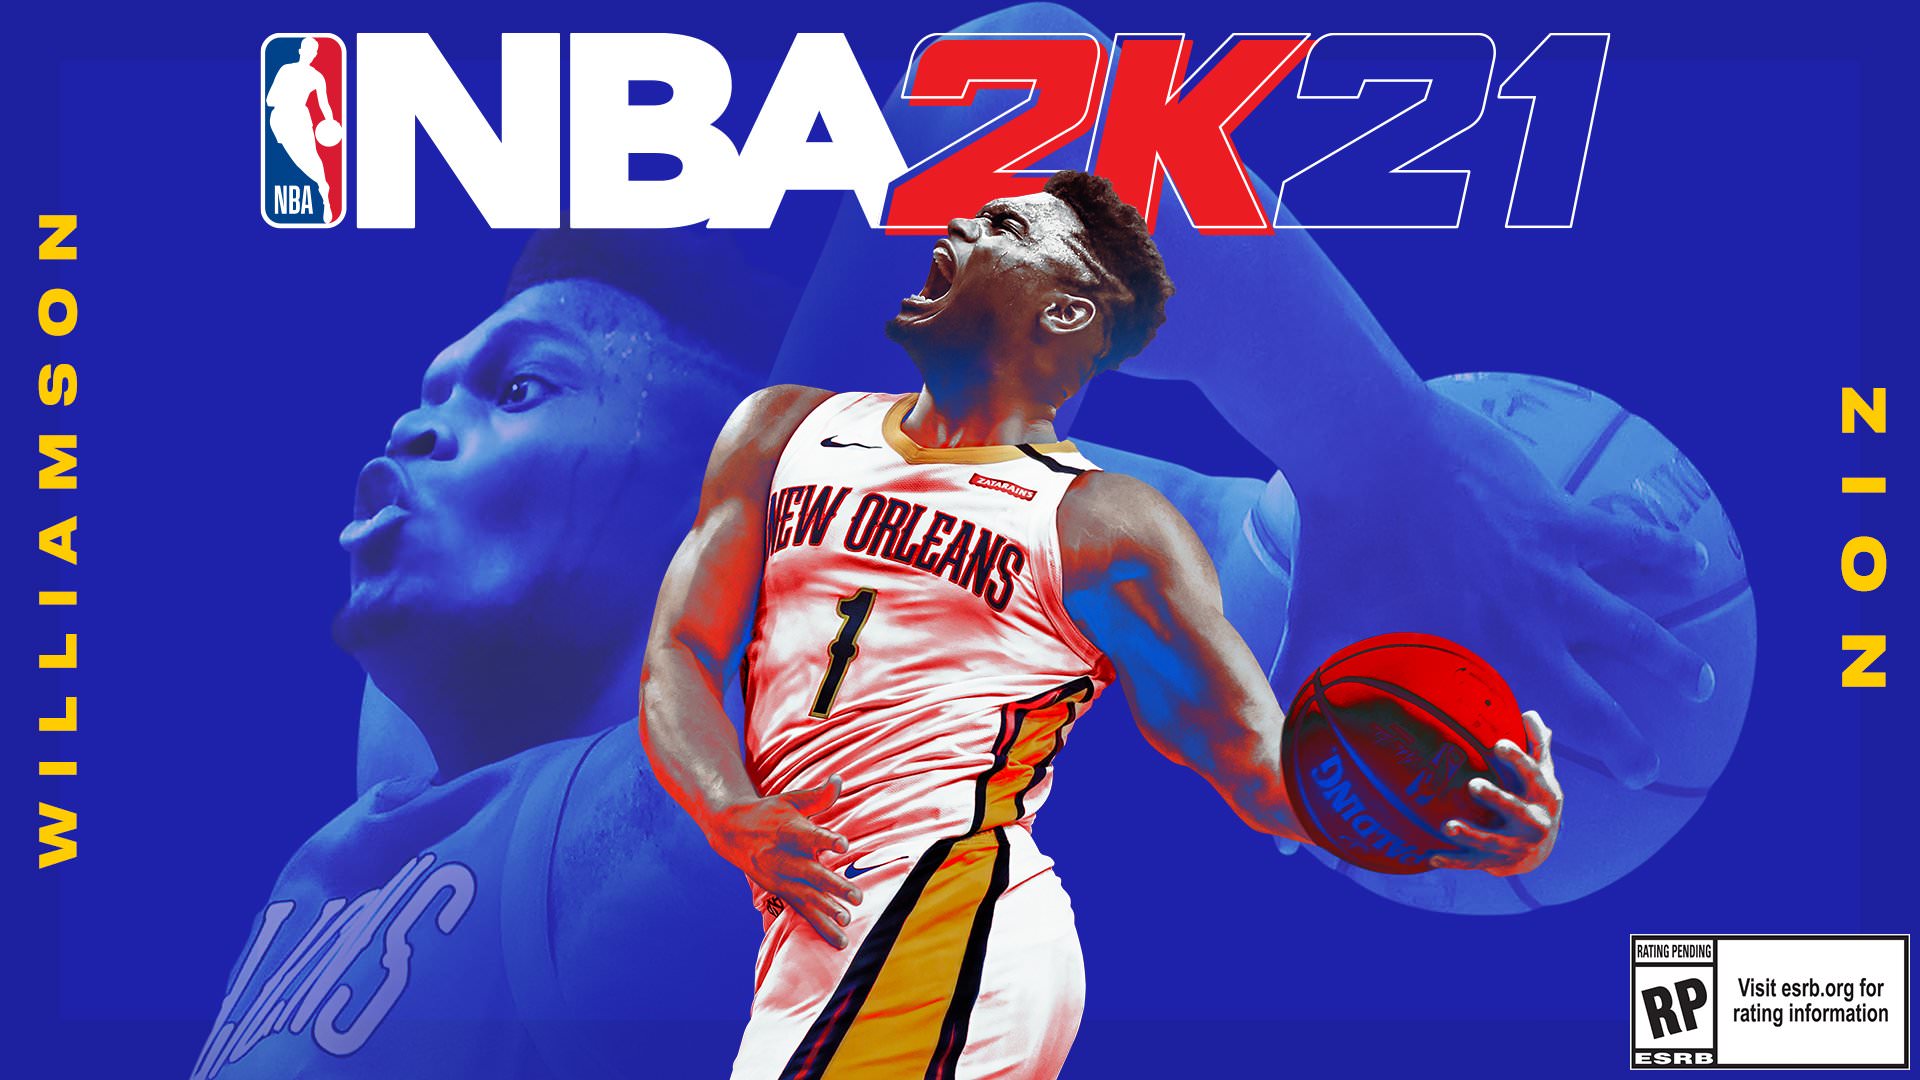 NBA 2K21 لیگ شخصی‌سازی‌شده‌ی زنان و حالت‌های آنلاین آن را در نسخه‌های نسل بعد بازی دریافت می‌کند